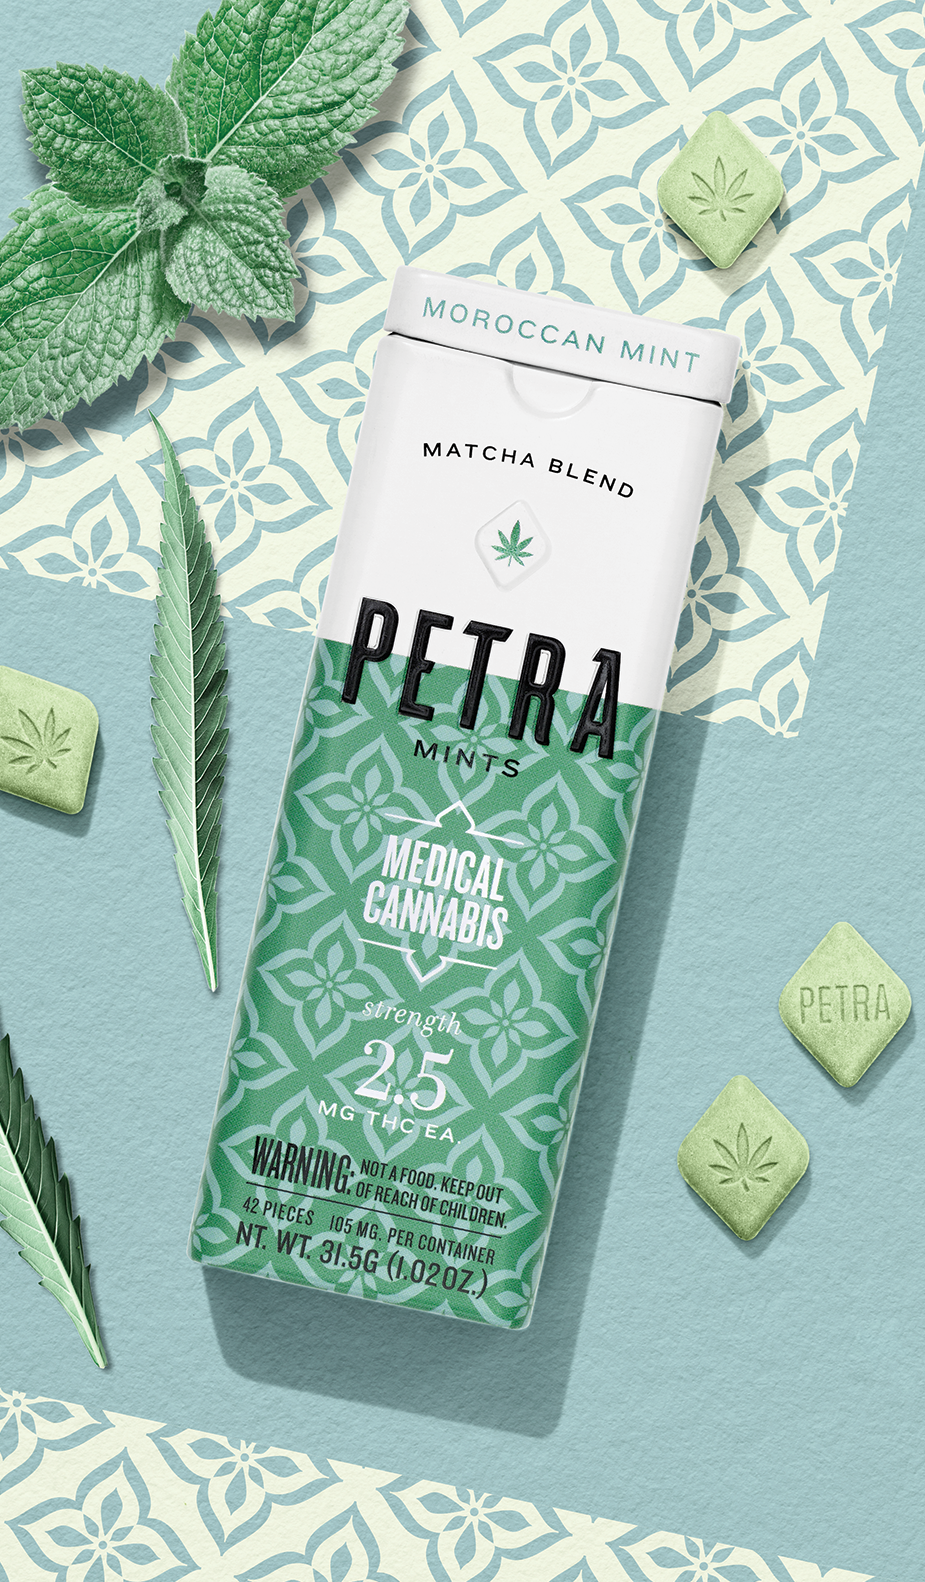 Kiva Confections debuts new sugar-free cannabis mint